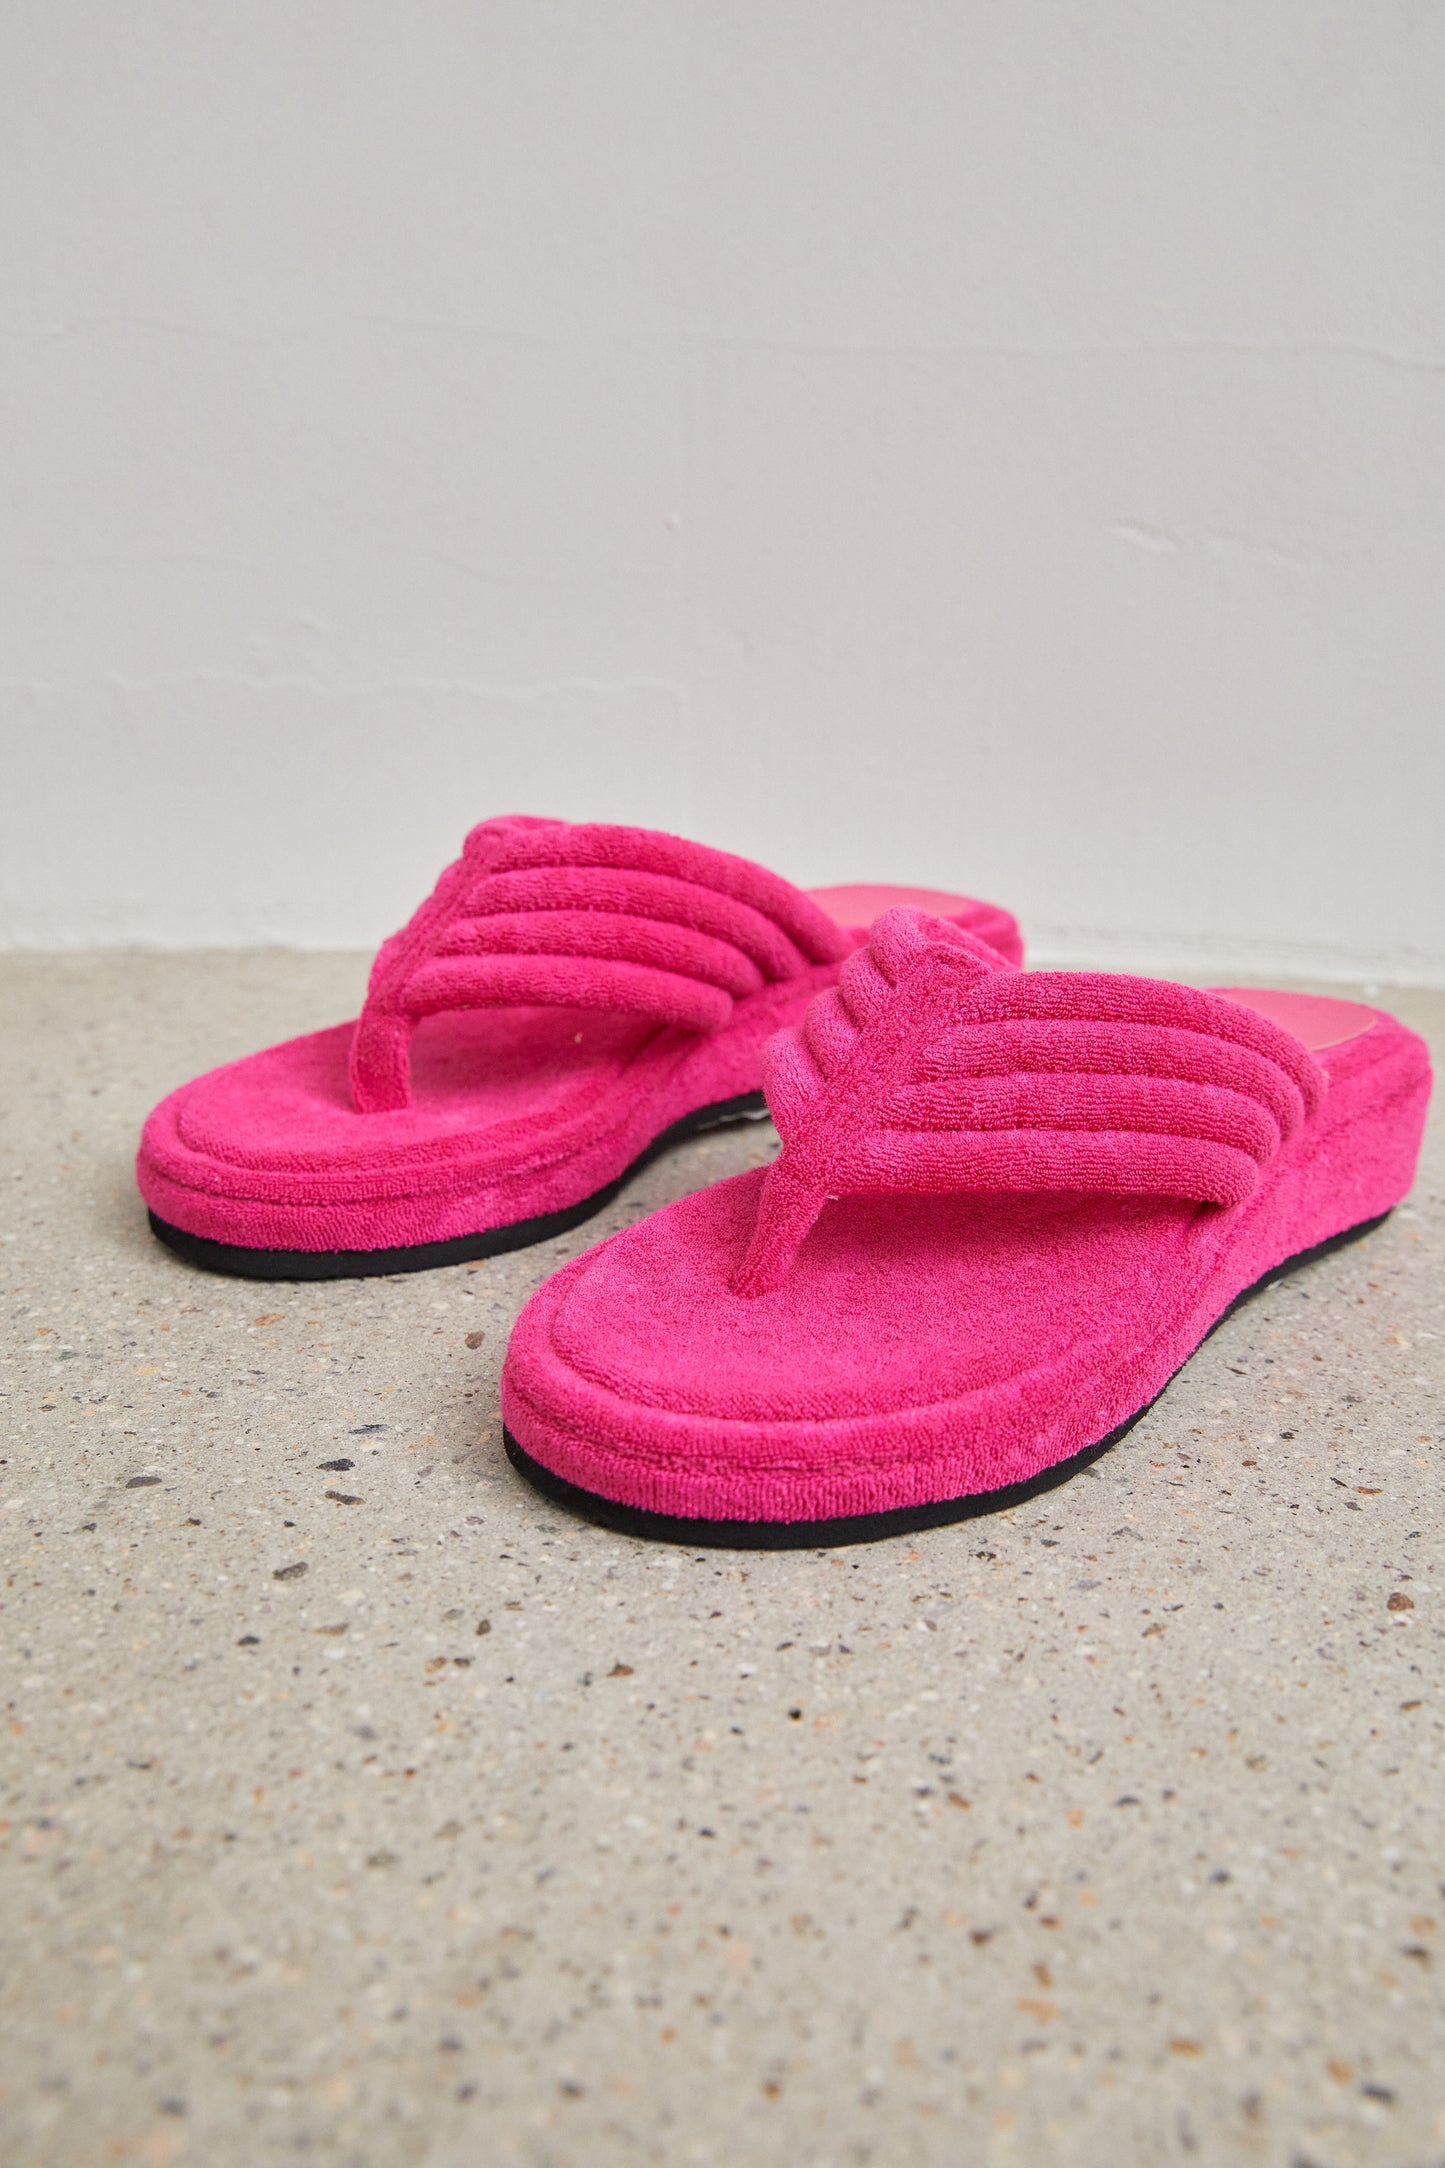 Terry Cloth Fleece Sandals, Fuchsia Pink